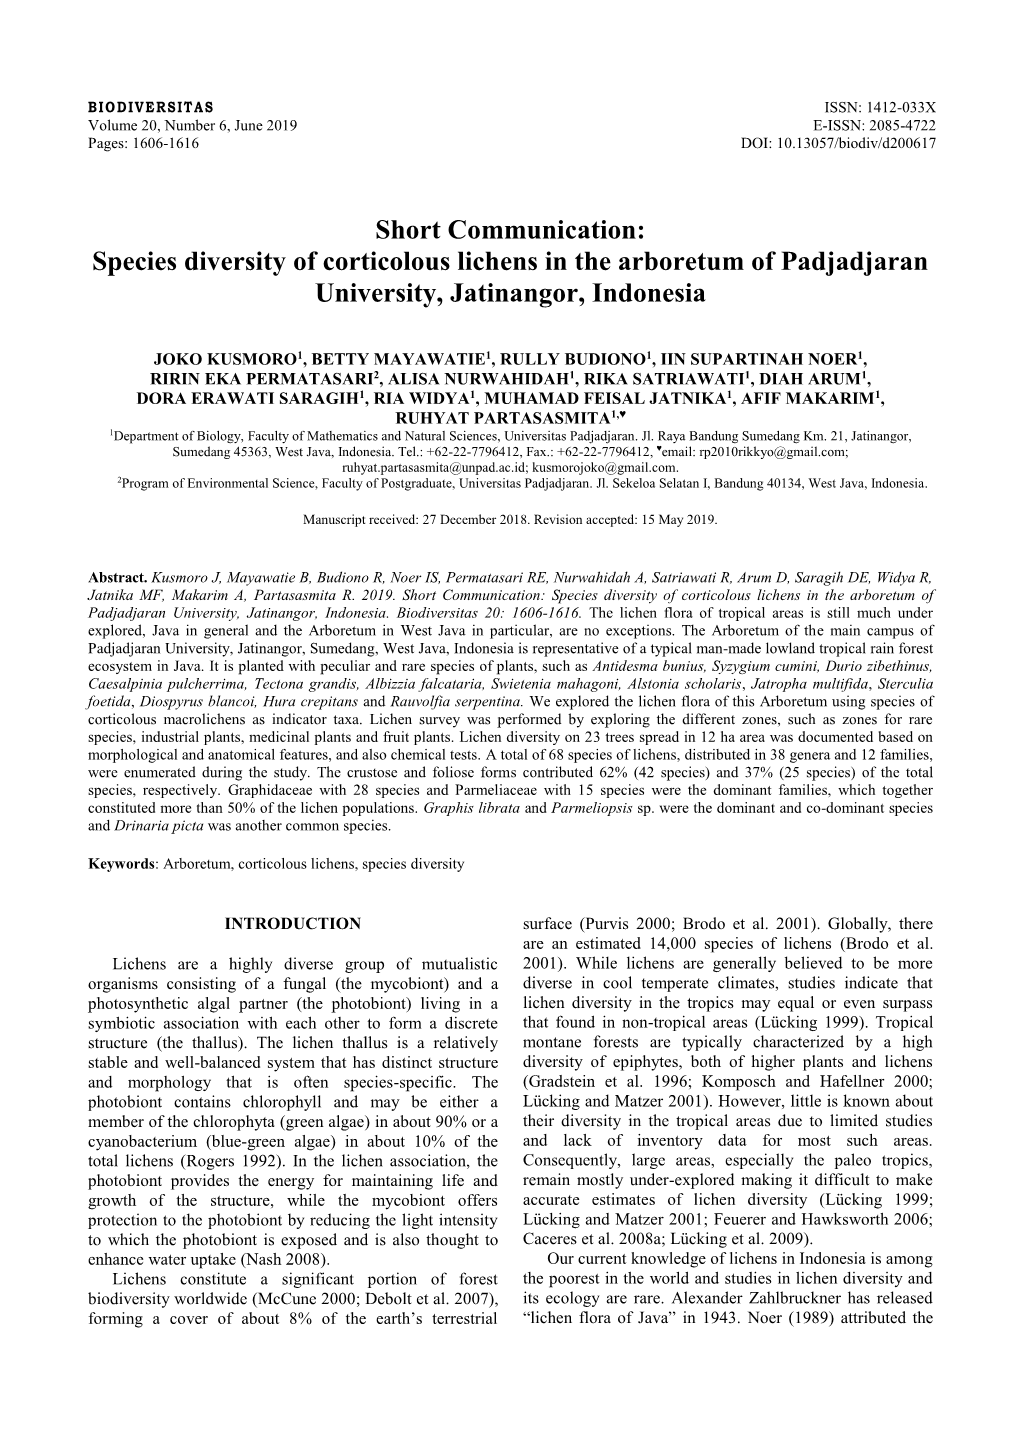 Species Diversity of Corticolous Lichens in the Arboretum of Padjadjaran University, Jatinangor, Indonesia